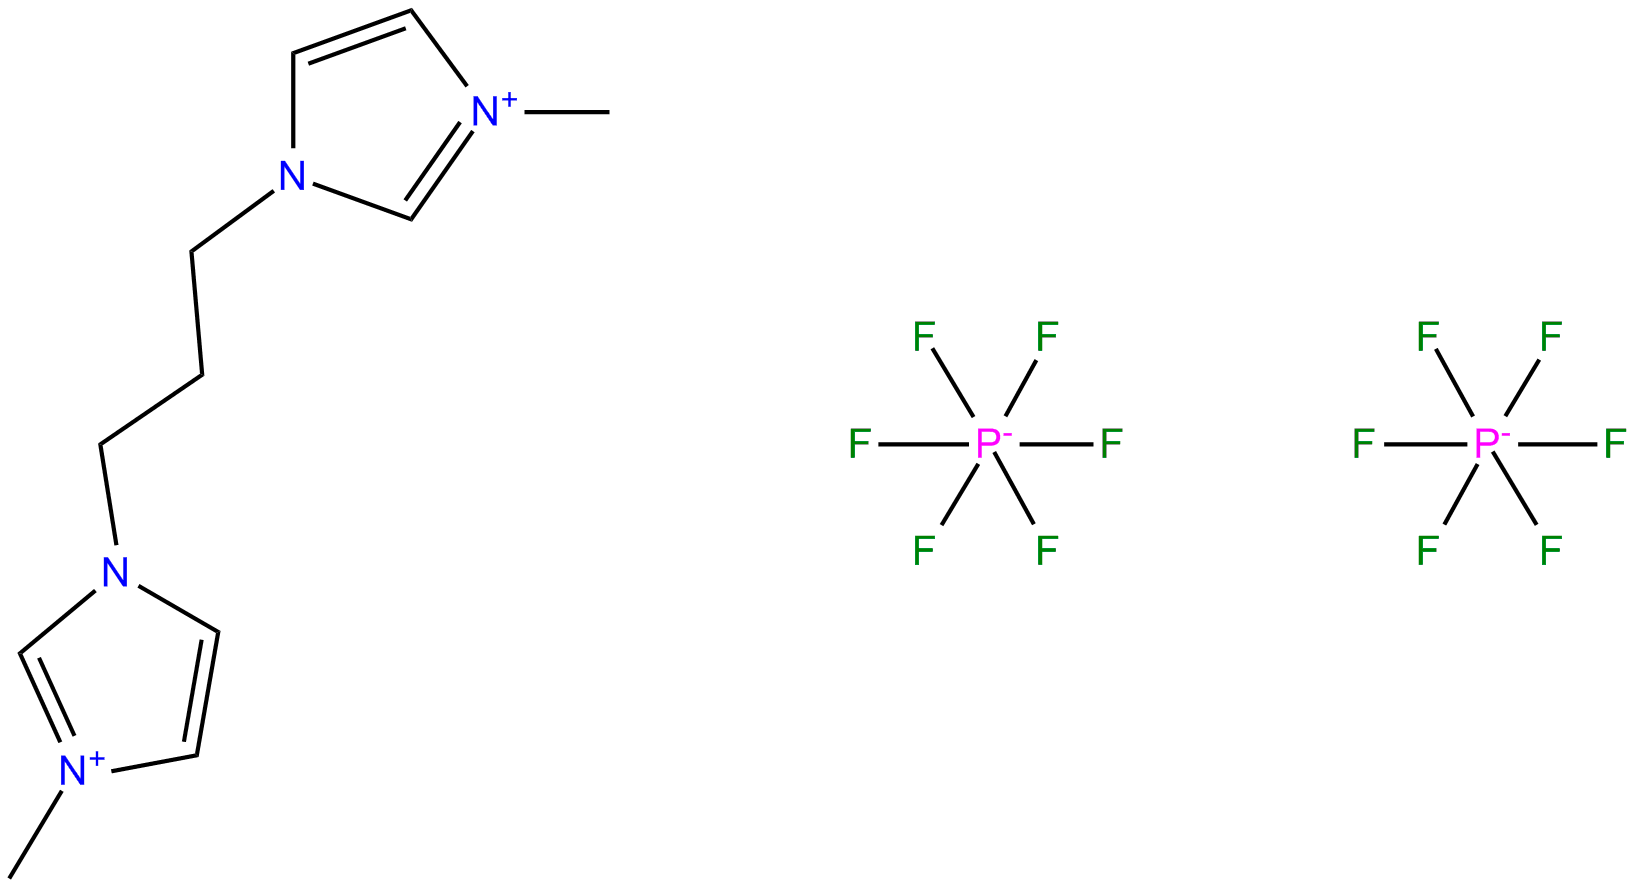 Image of 1,1'-(propane-1,3-diyl)-bis(3-methyl-1H-imidazolium-1-yl) dihexafluorophosphate